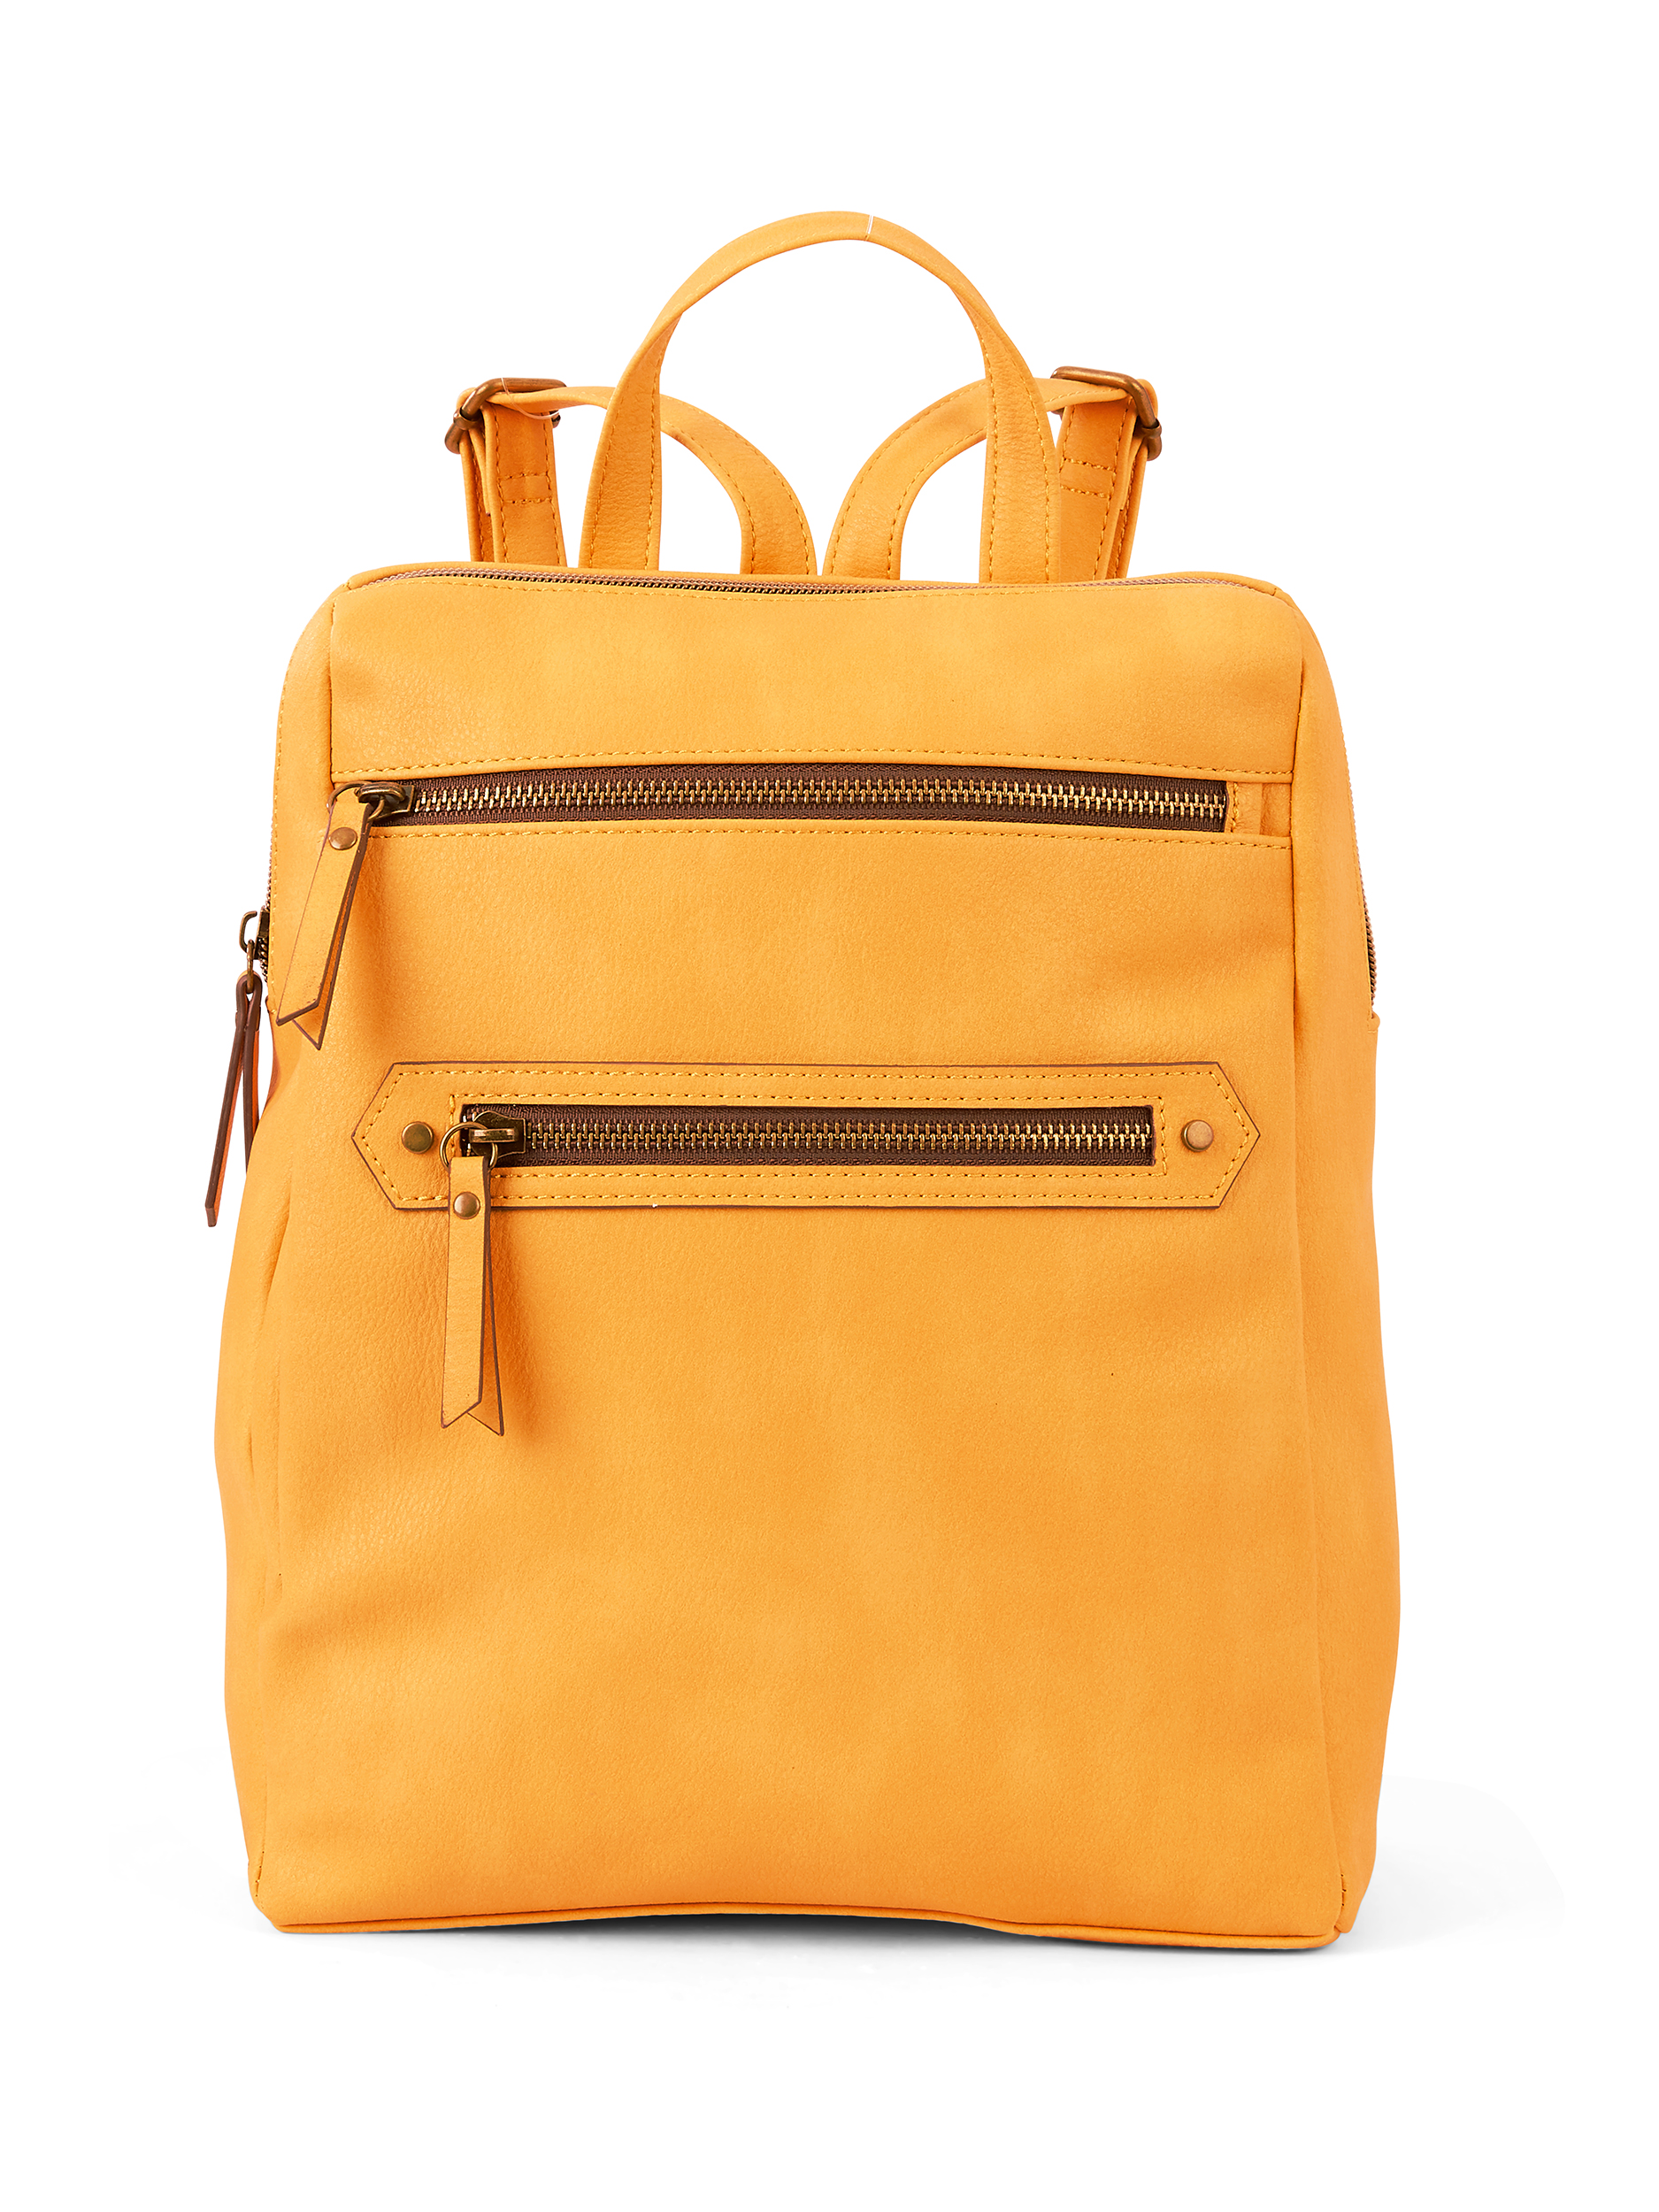 Time & Tru Cucamonga Backpack, Mustard - image 1 of 4